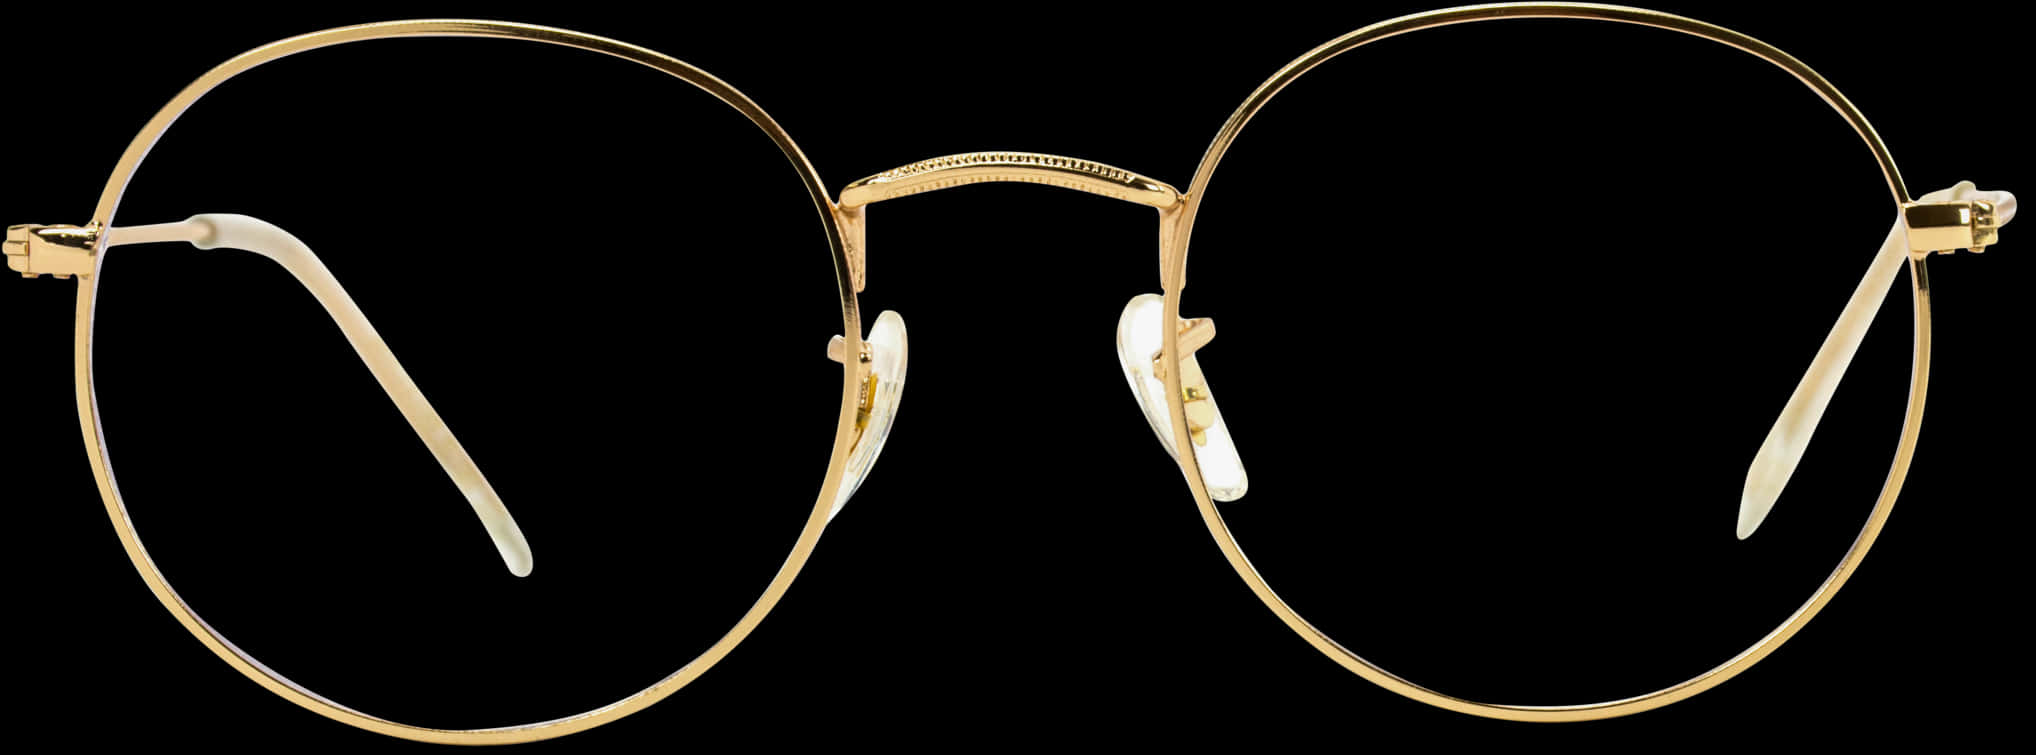 Elegant Gold Round Glasses PNG